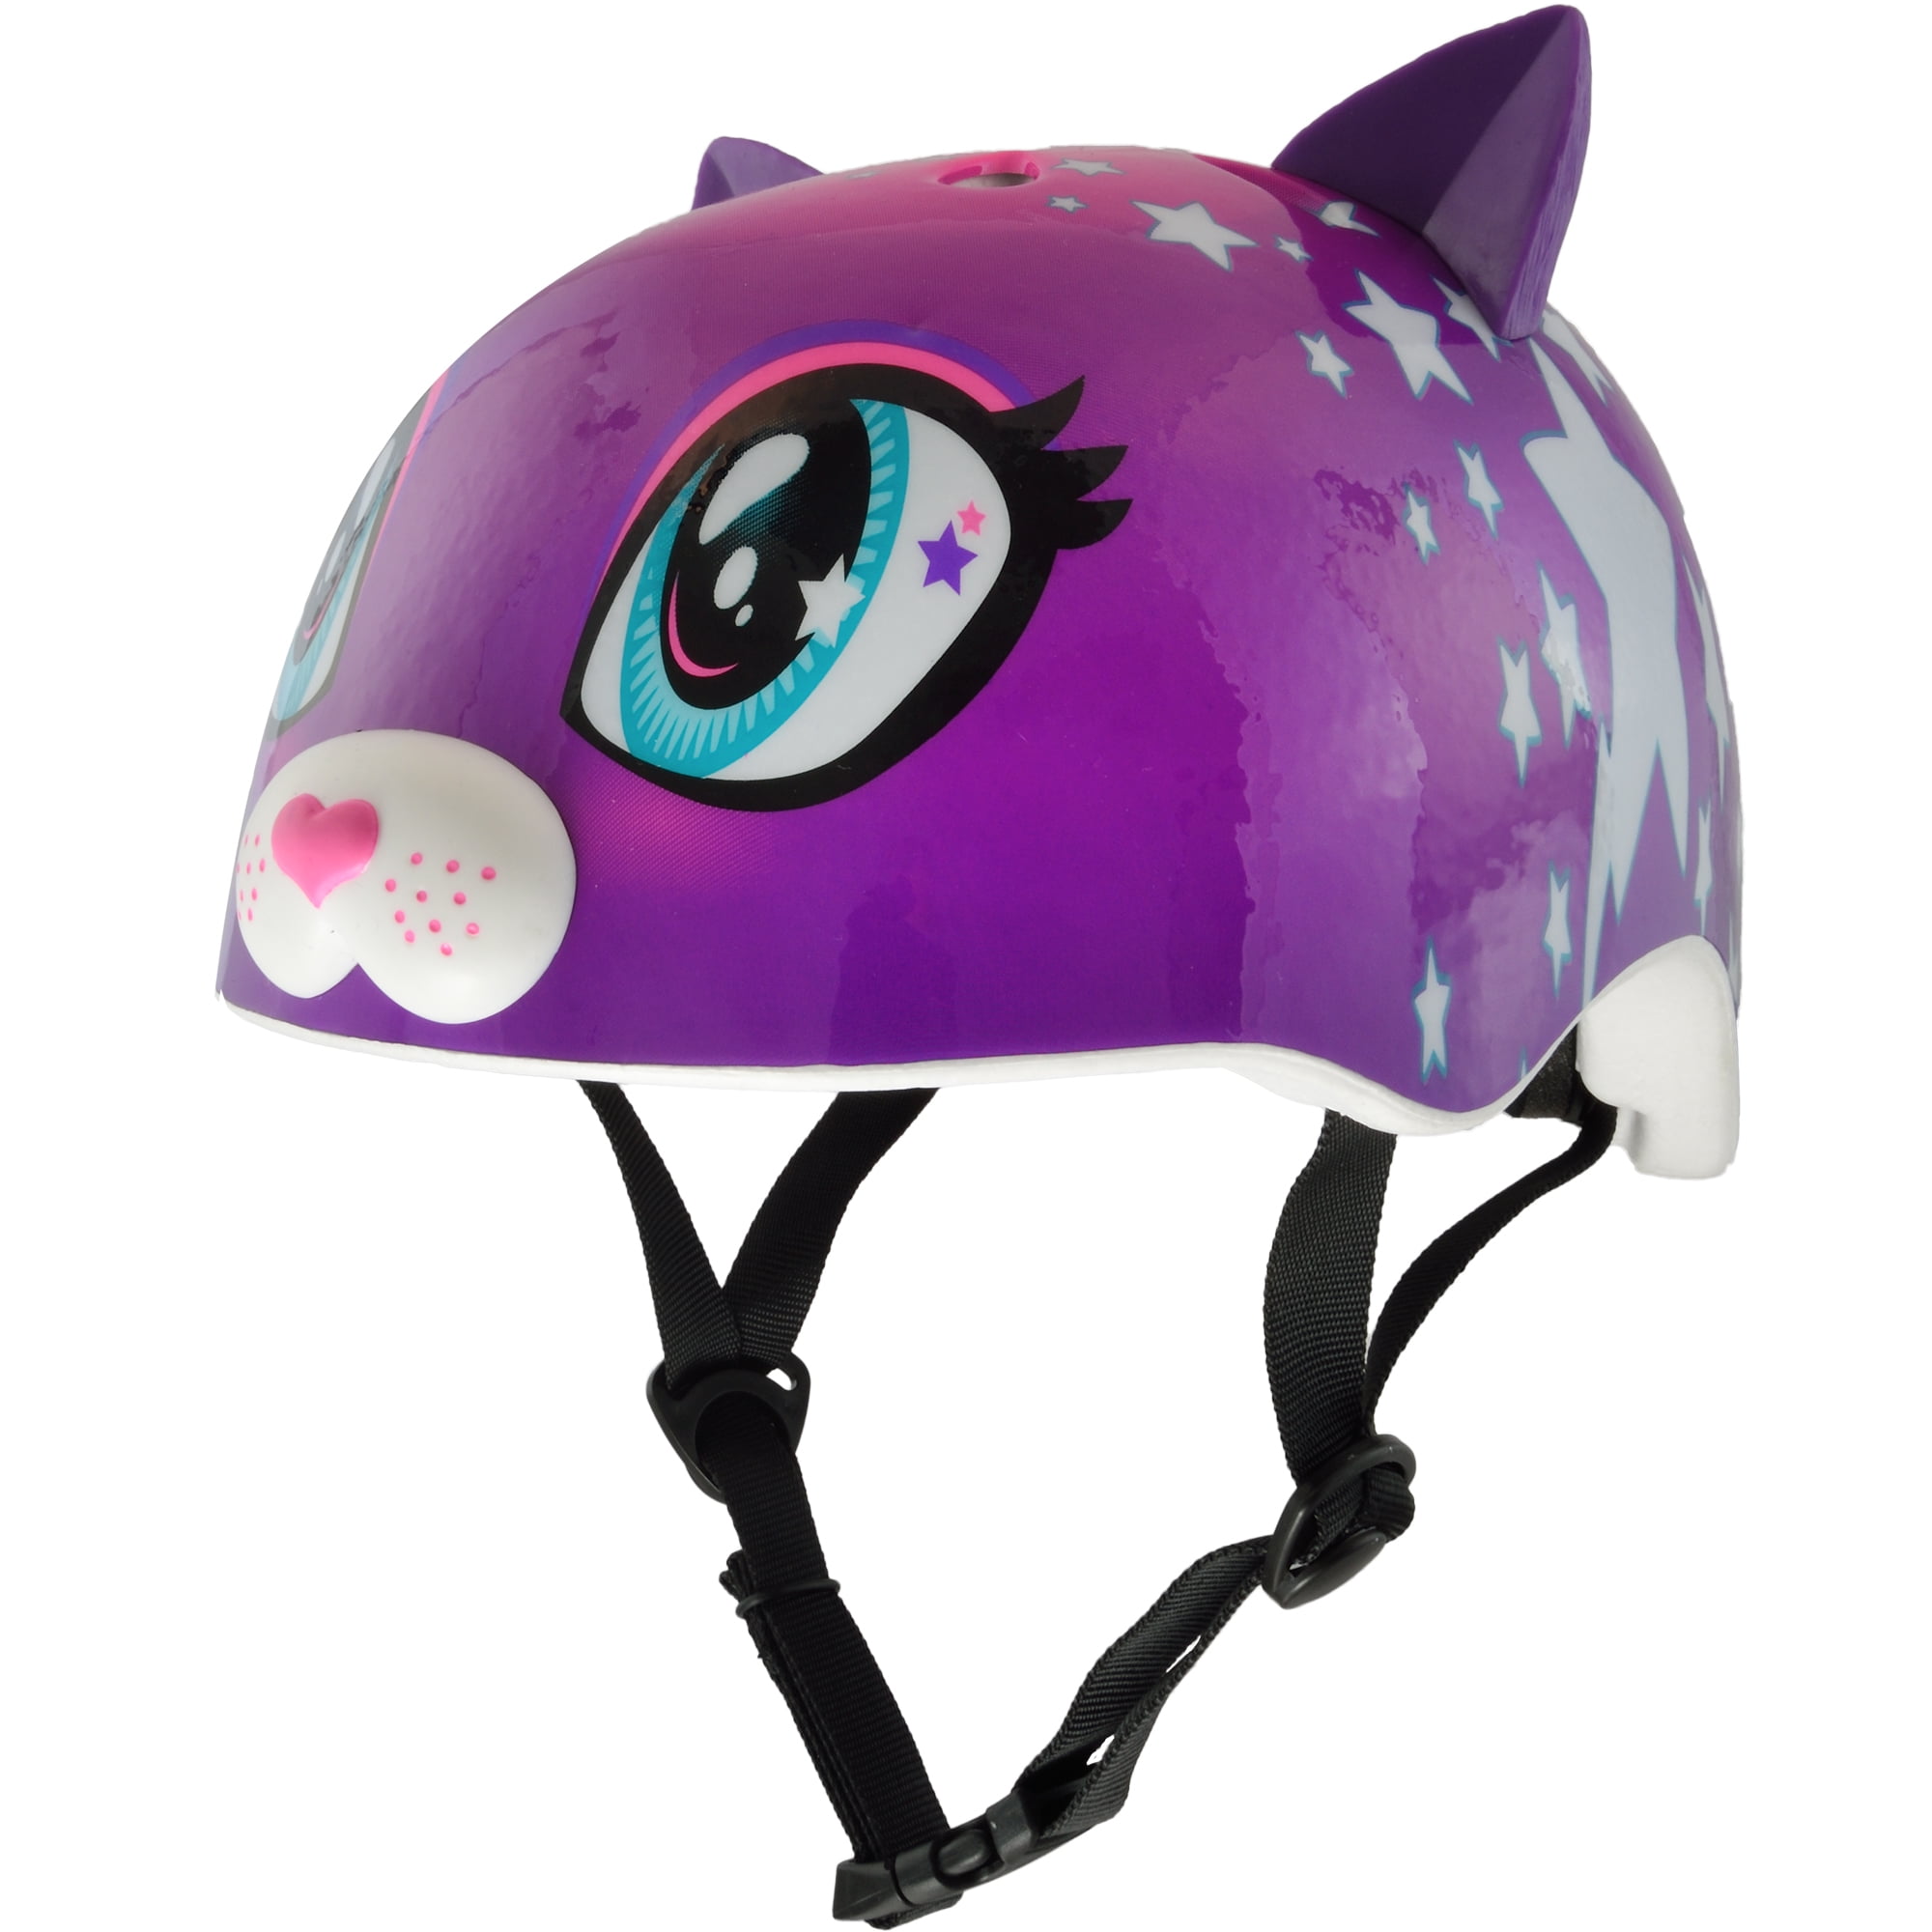 Size 50-52cm With Light Kids Purple Helmet 